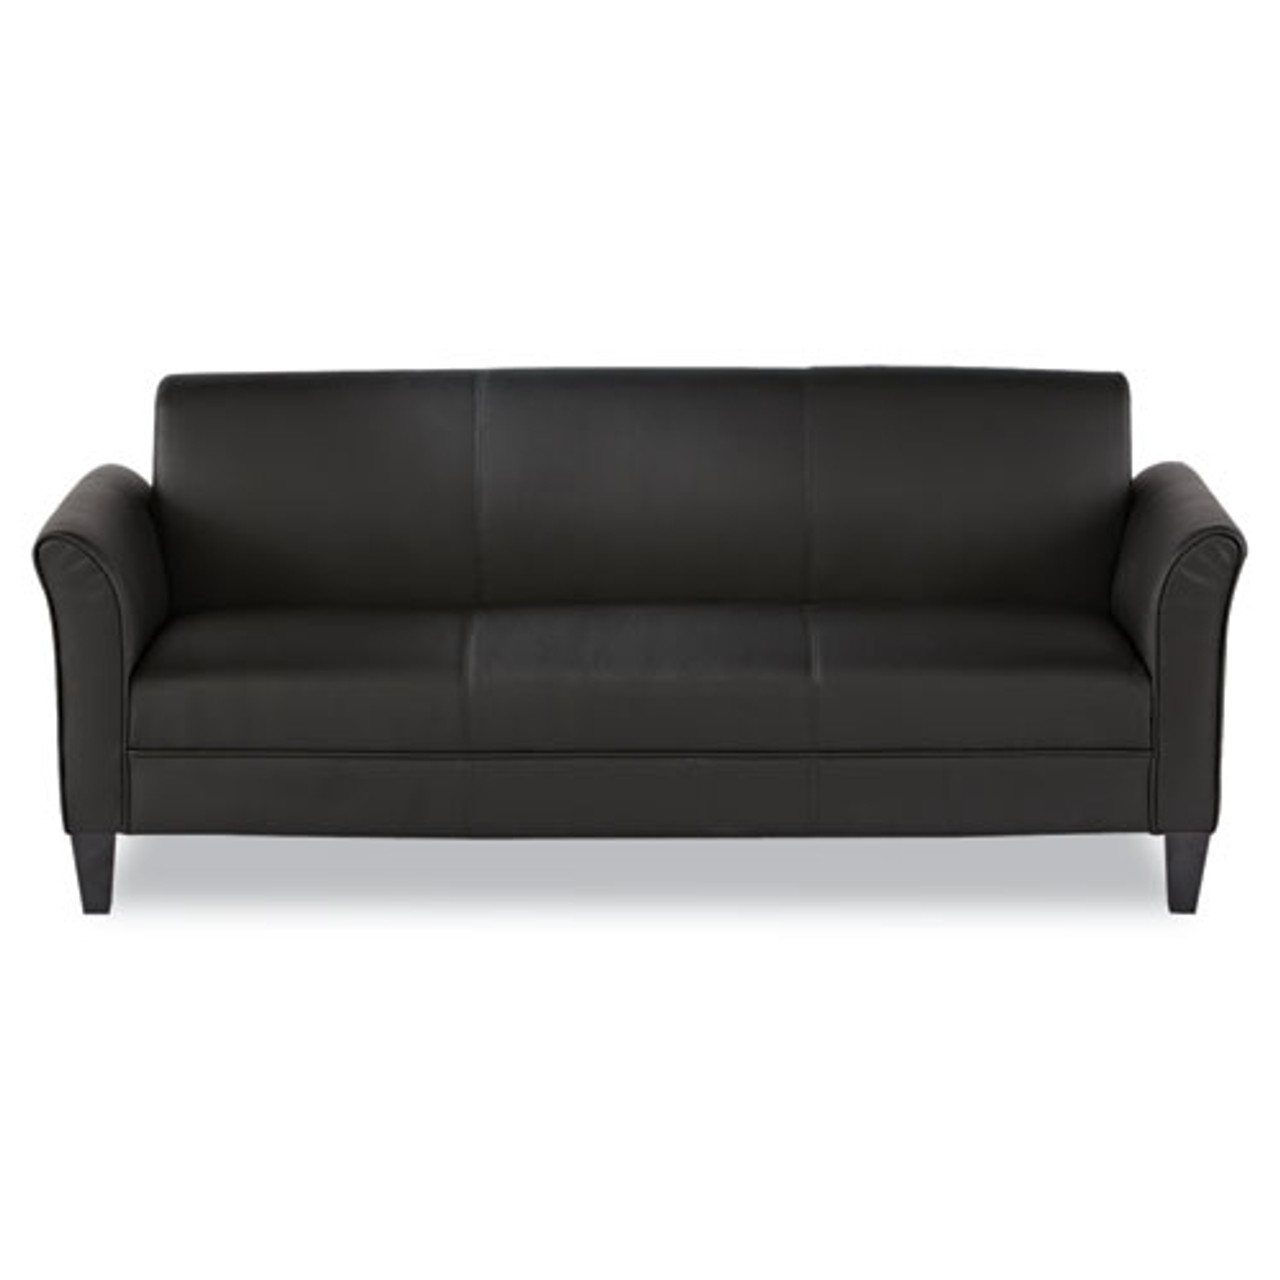 Alera Reception Lounge Furniture, Loveseat, 55-1/2w X 31-1/2d X 32h, Black, #AL-1452